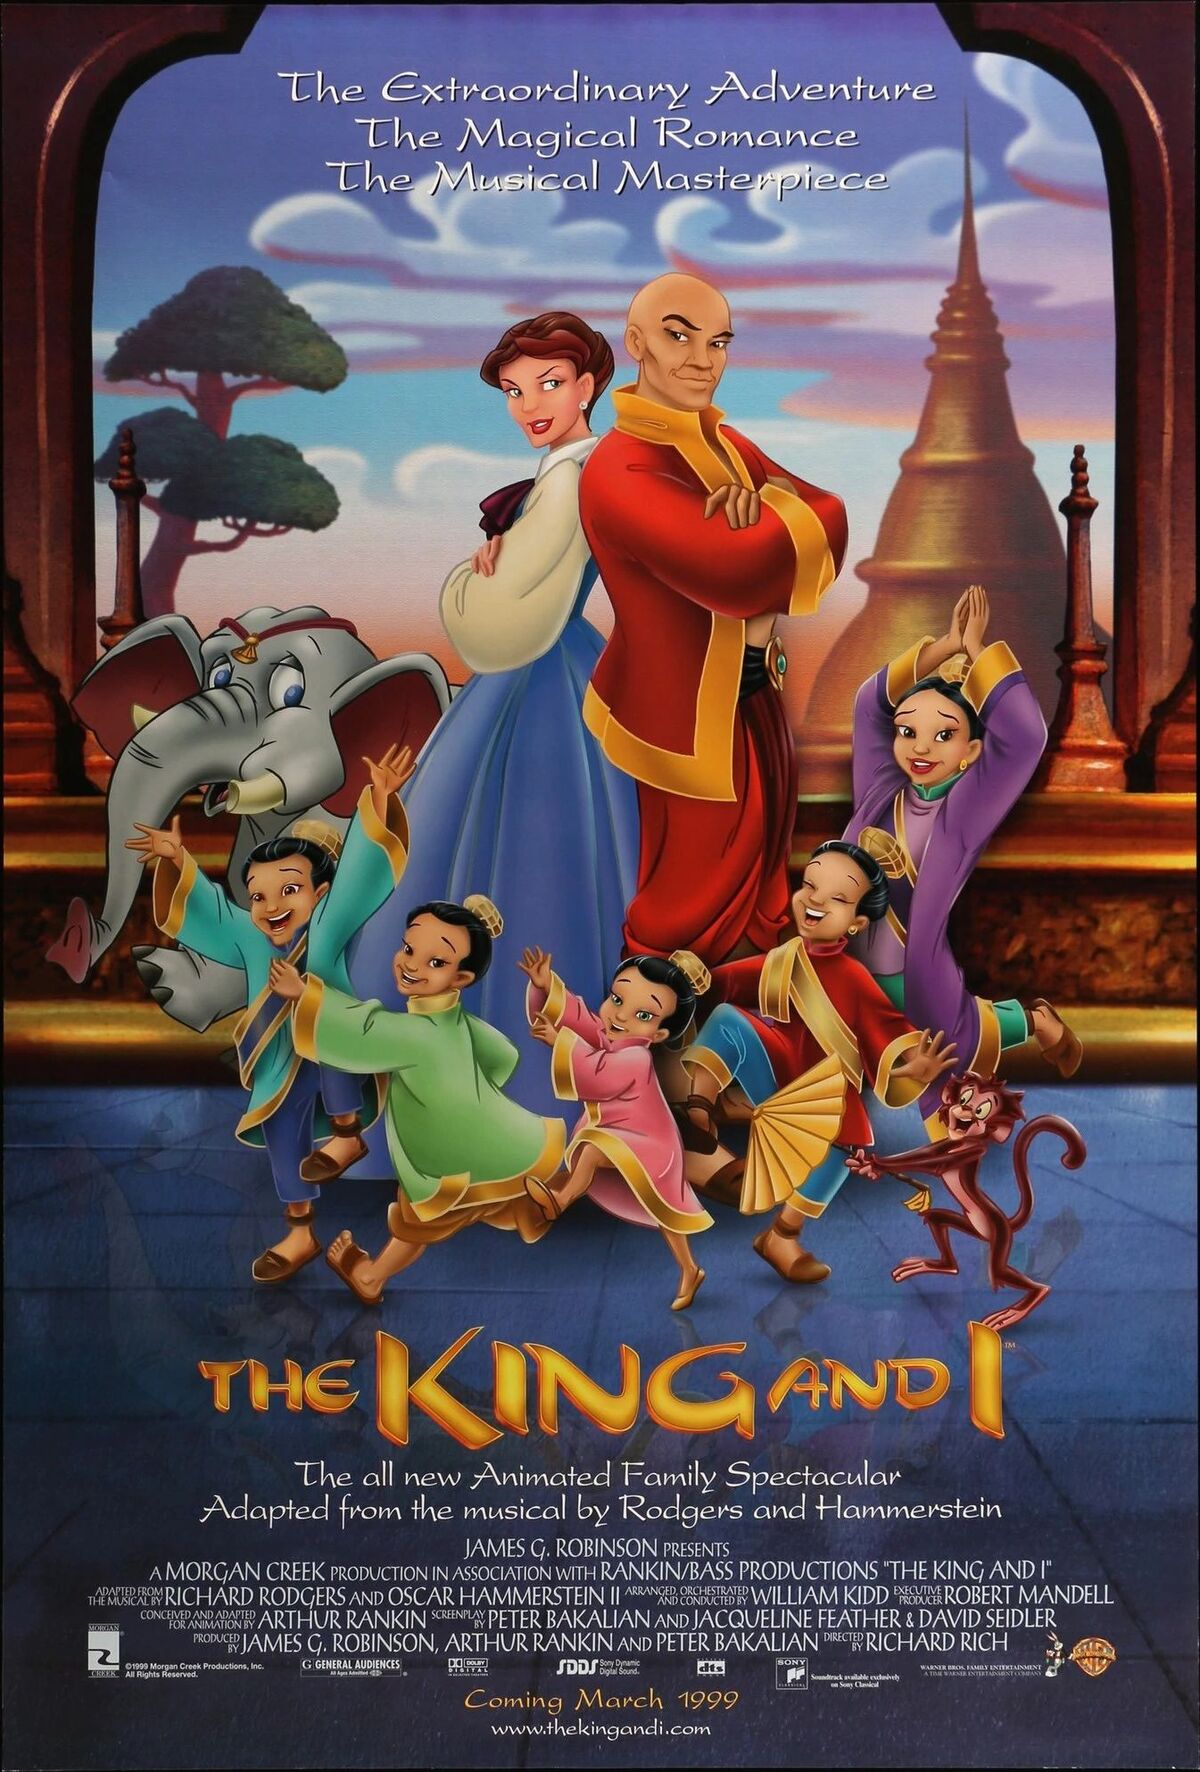 The King and I Warner Bros image